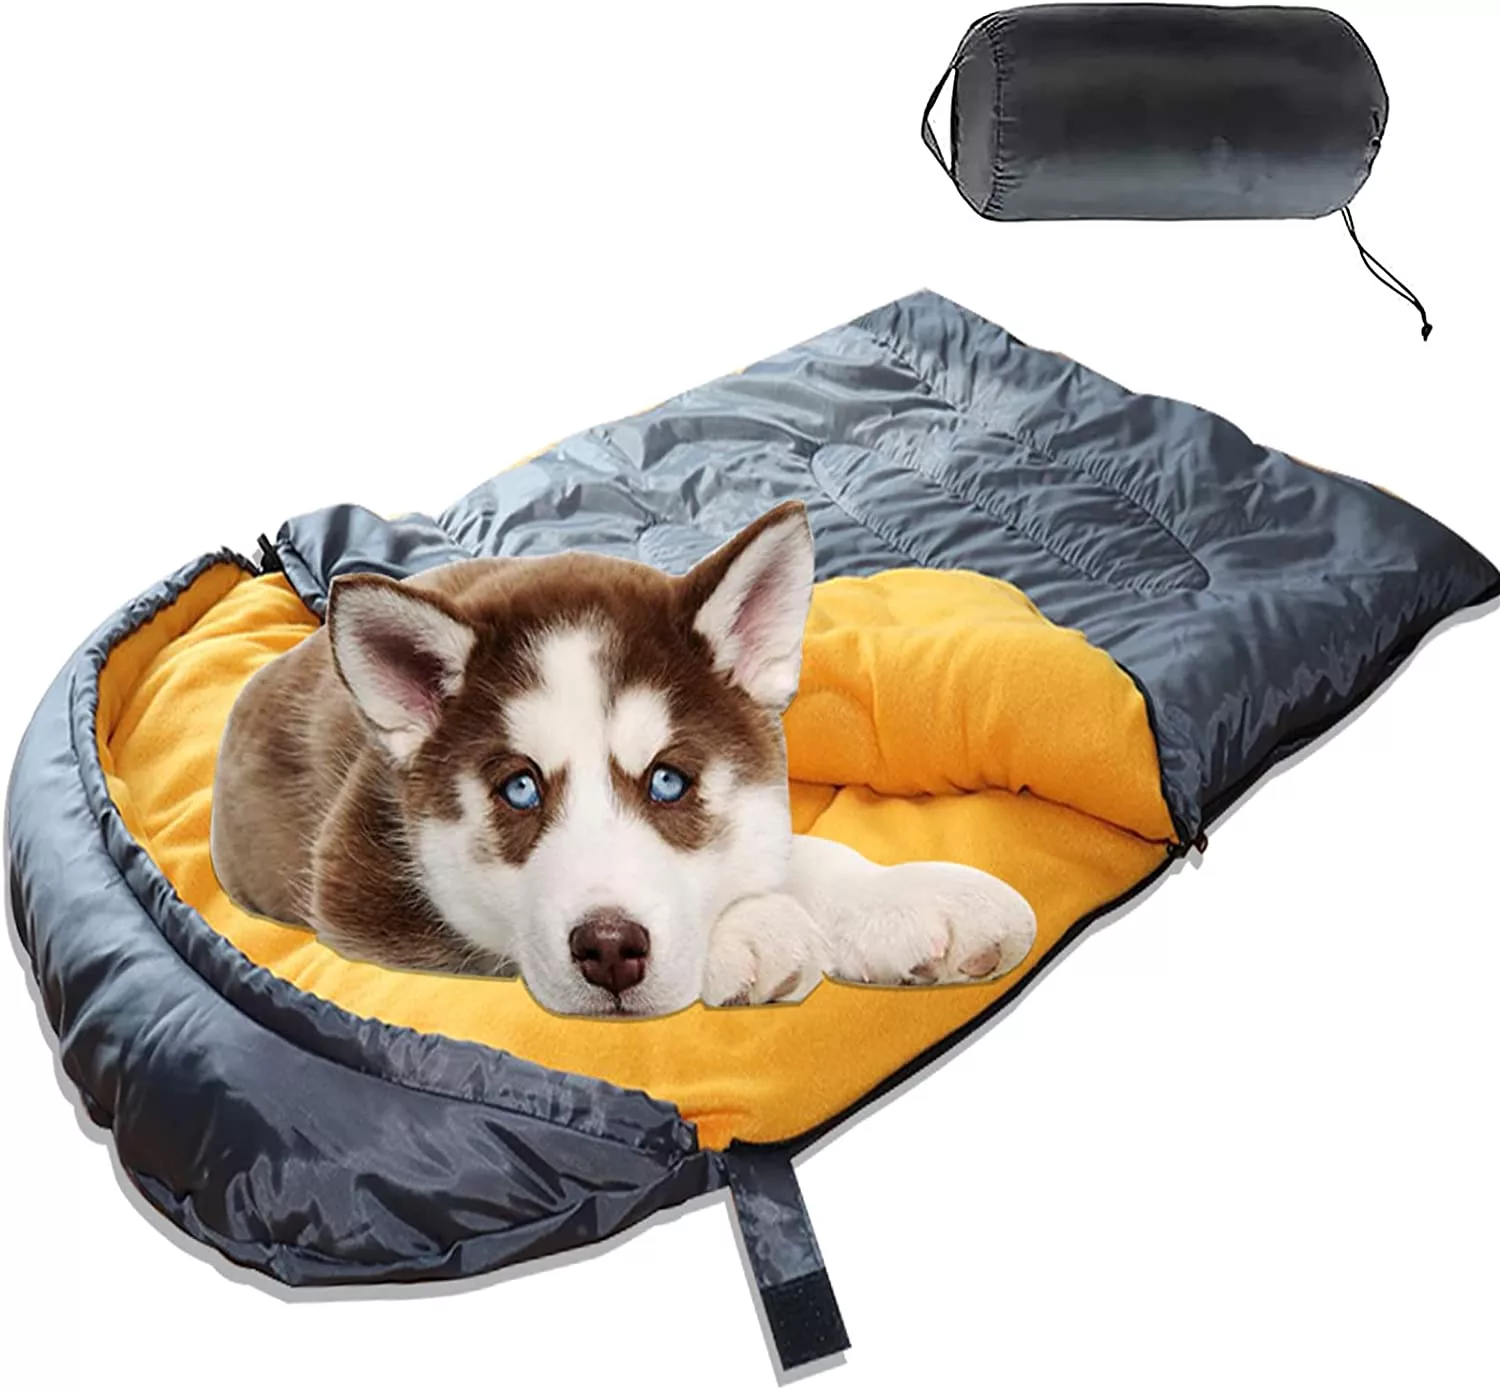 Husky inside the Camping Sleeping Bag For Dogs